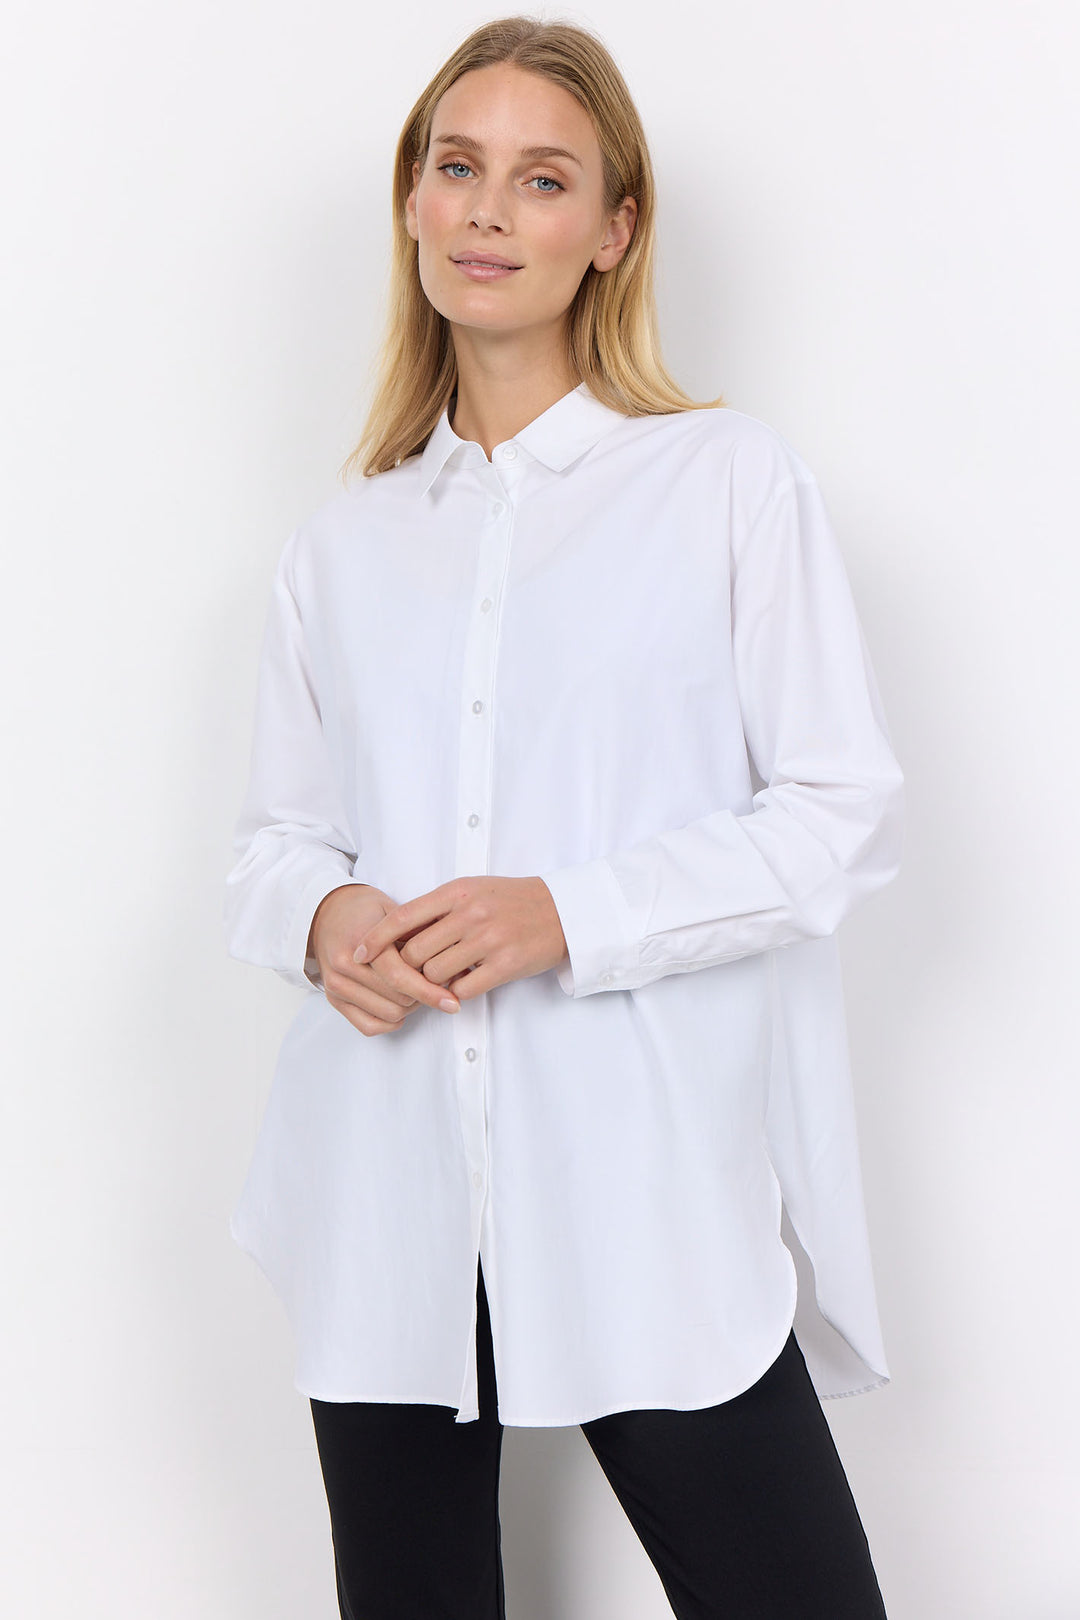 Soya Concept SC-Netti 52 40261-20 White Long Sleeve Shirt - Dotique